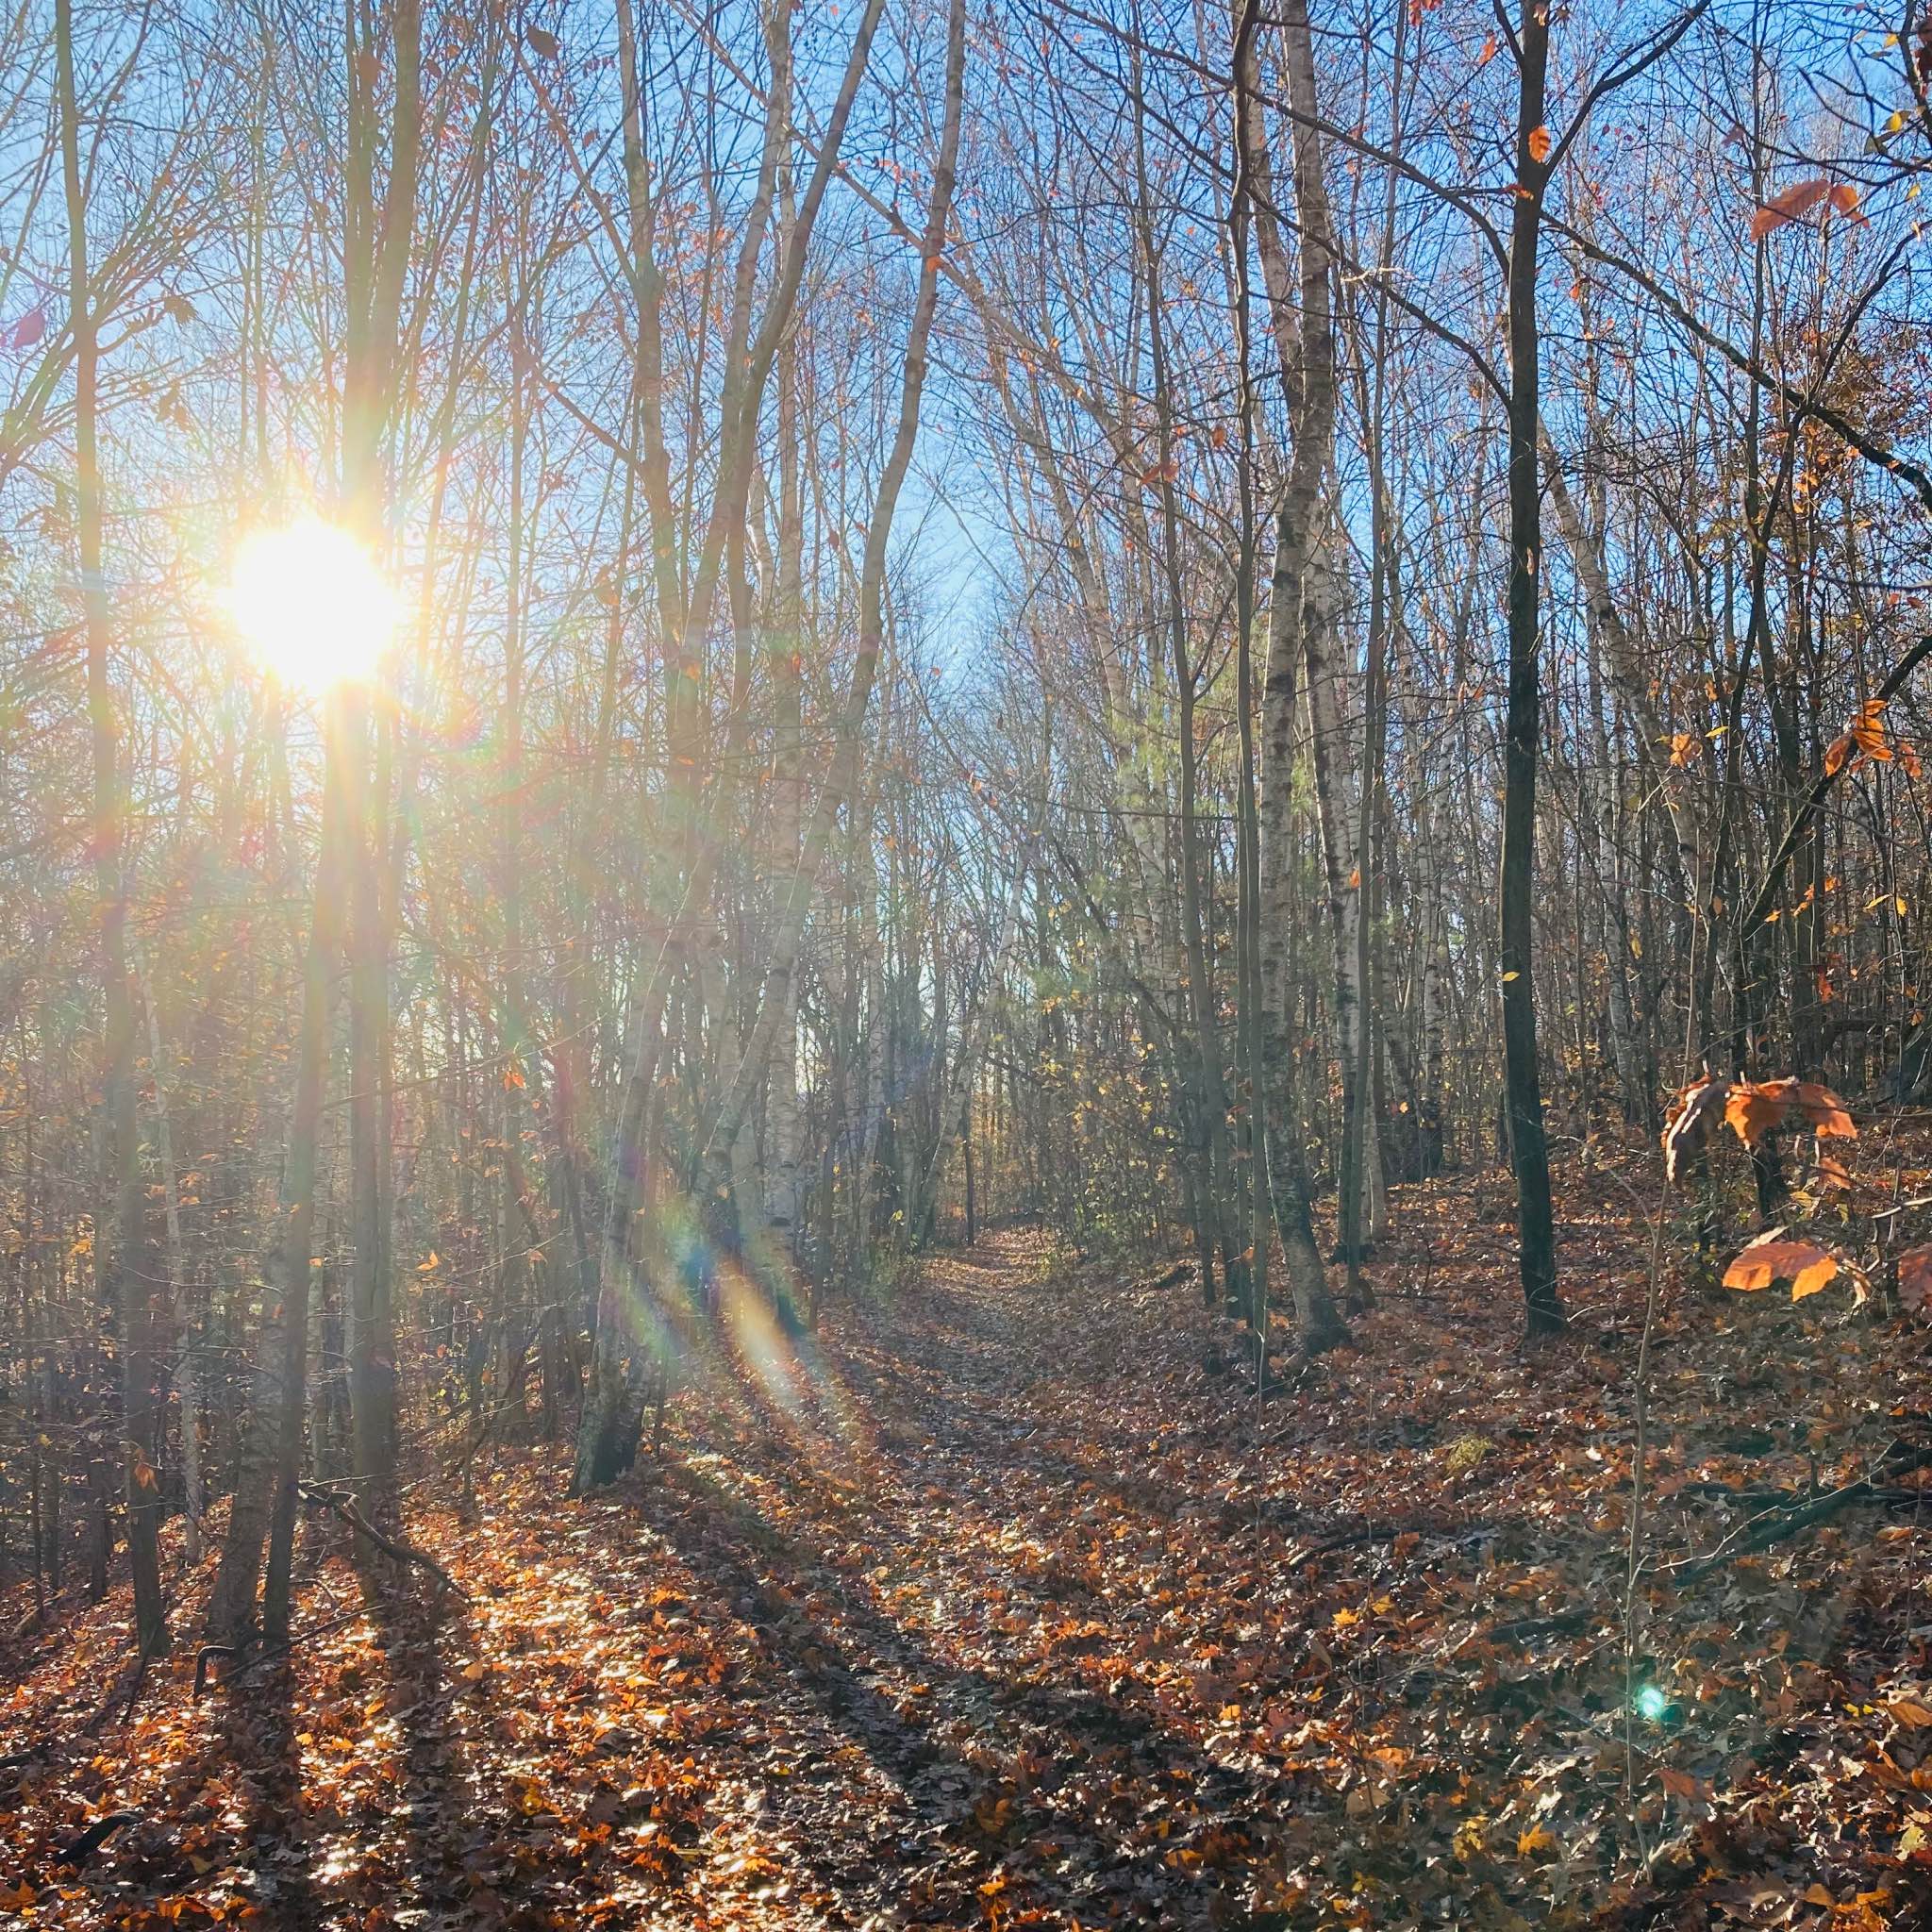 Sunrise over a leaf-strewn path through the forest